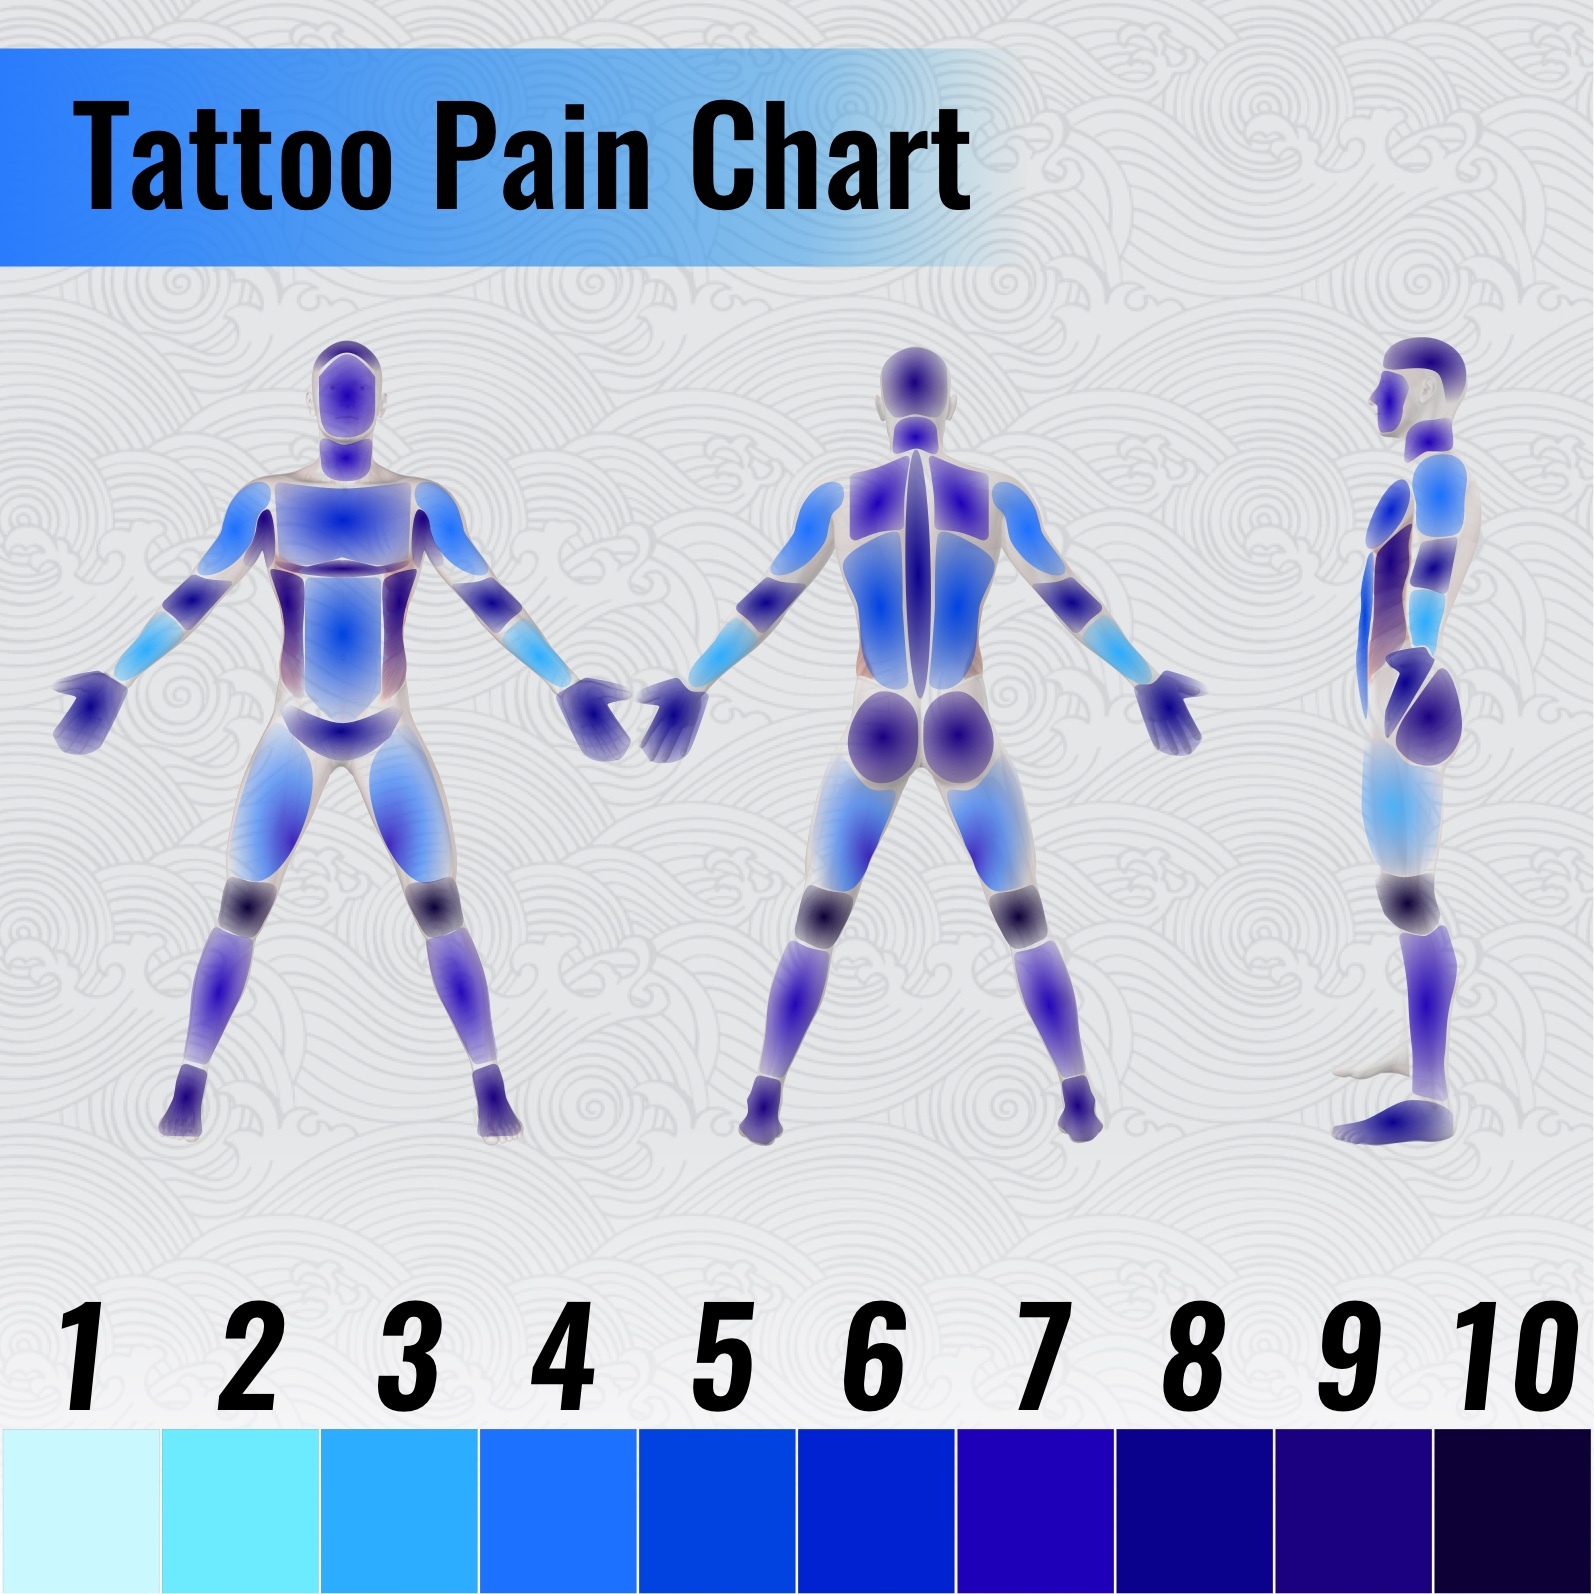 Groin tattoo pain